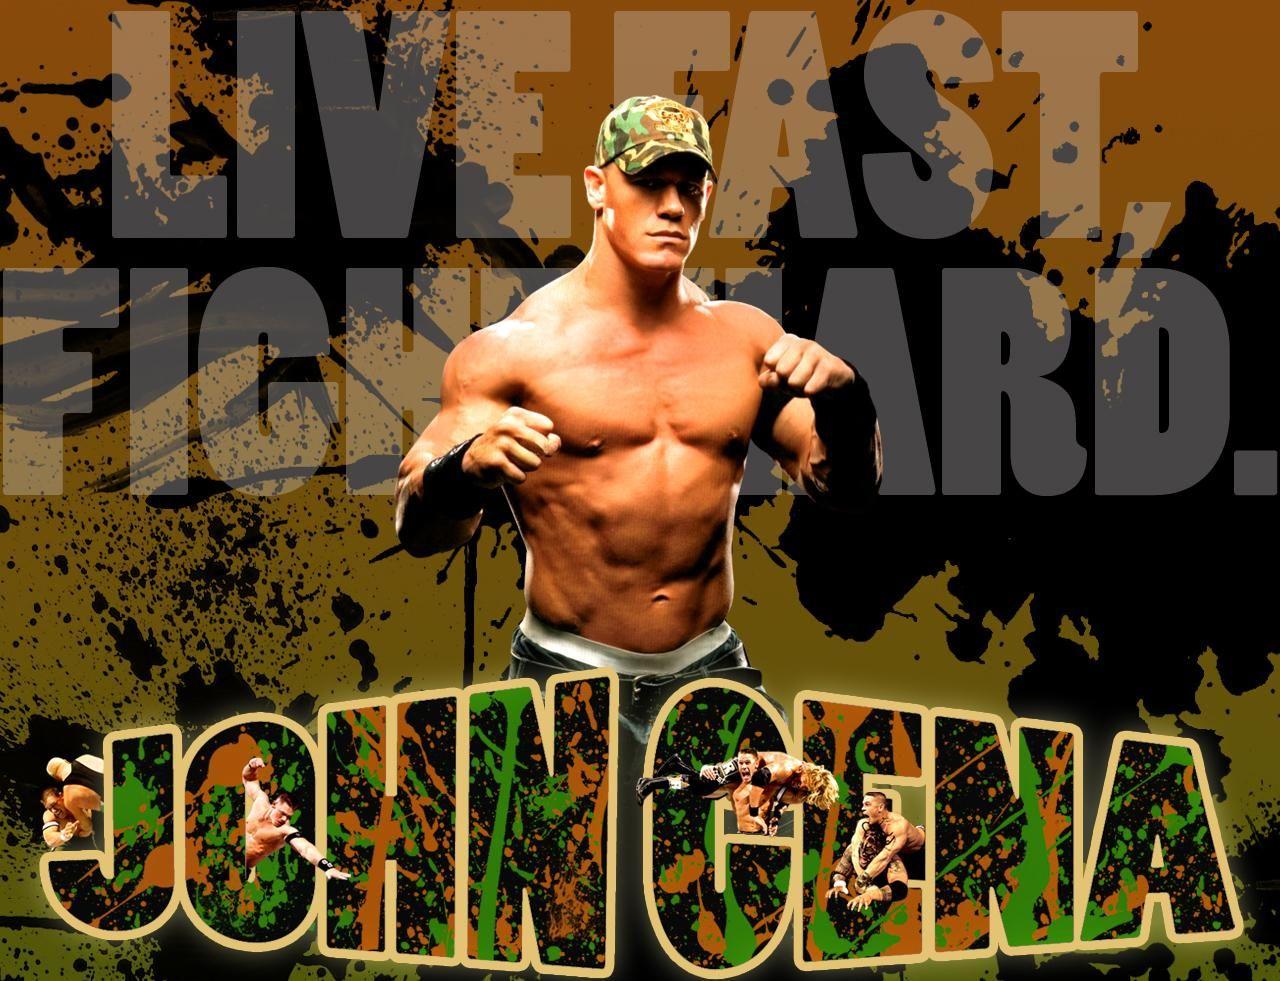 John Cena's Wallpaper Superstars, WWE Wallpaper, WWE PPV's